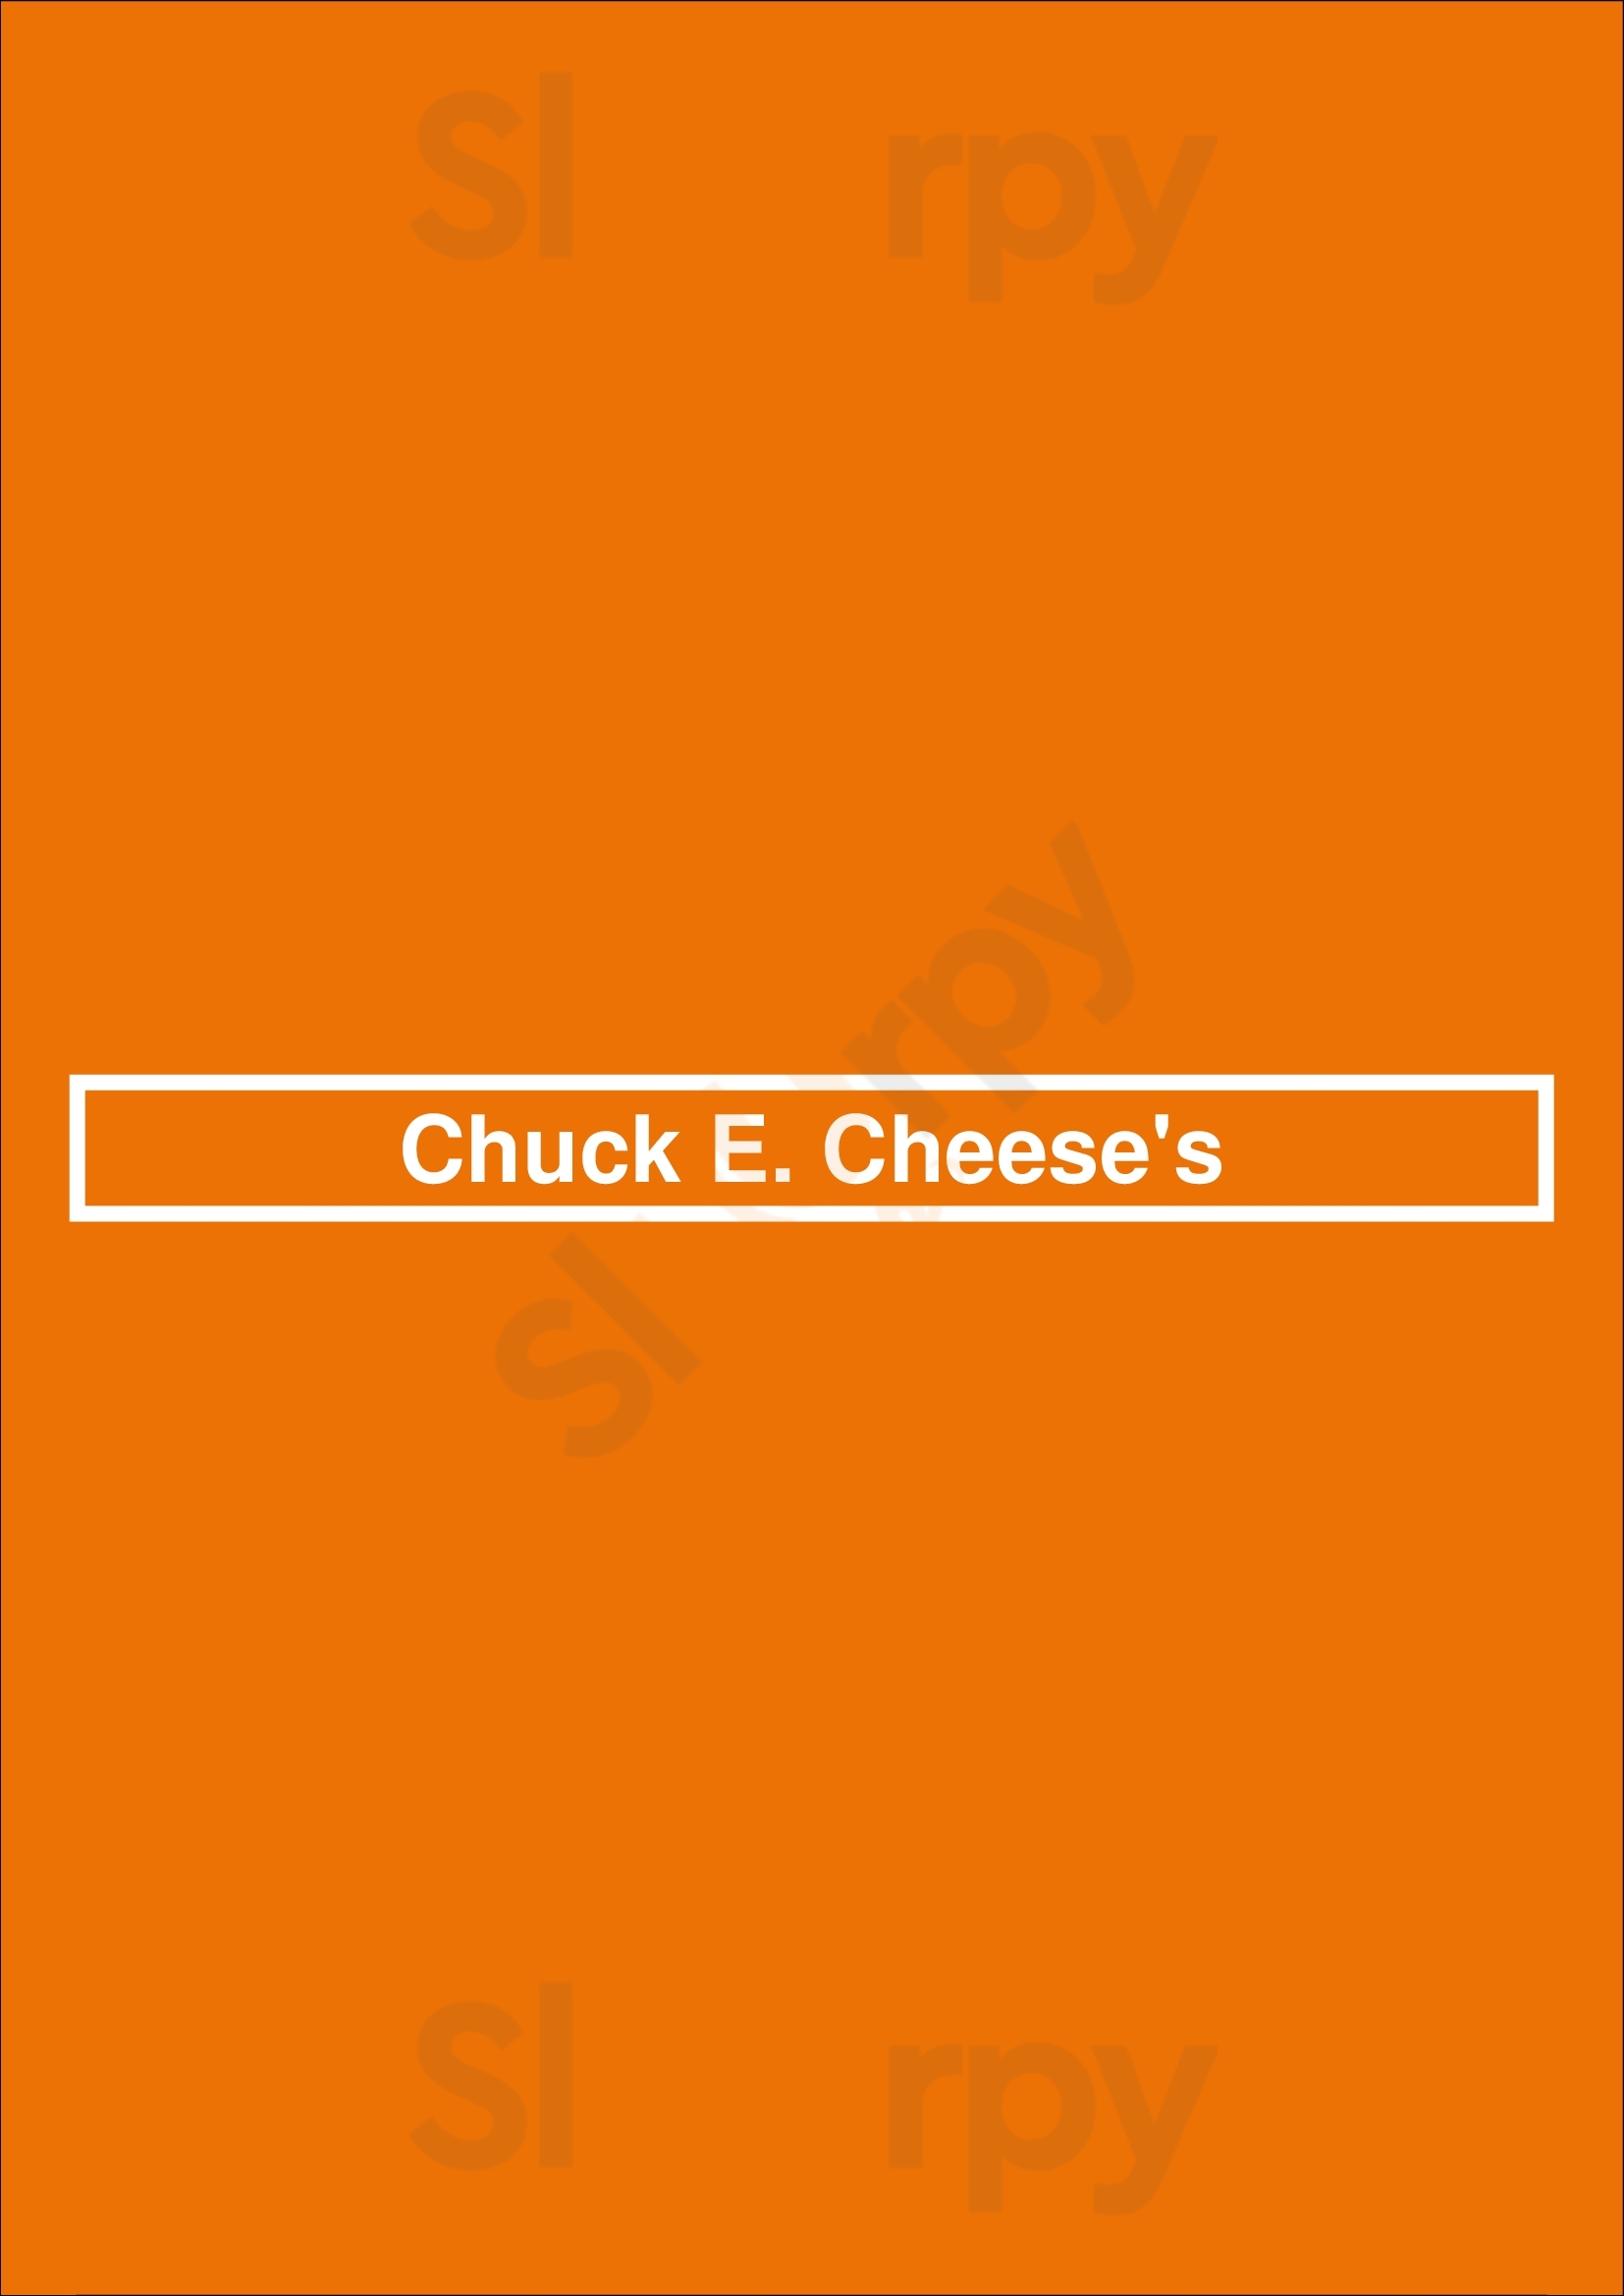 Chuck E. Cheese San Antonio Menu - 1